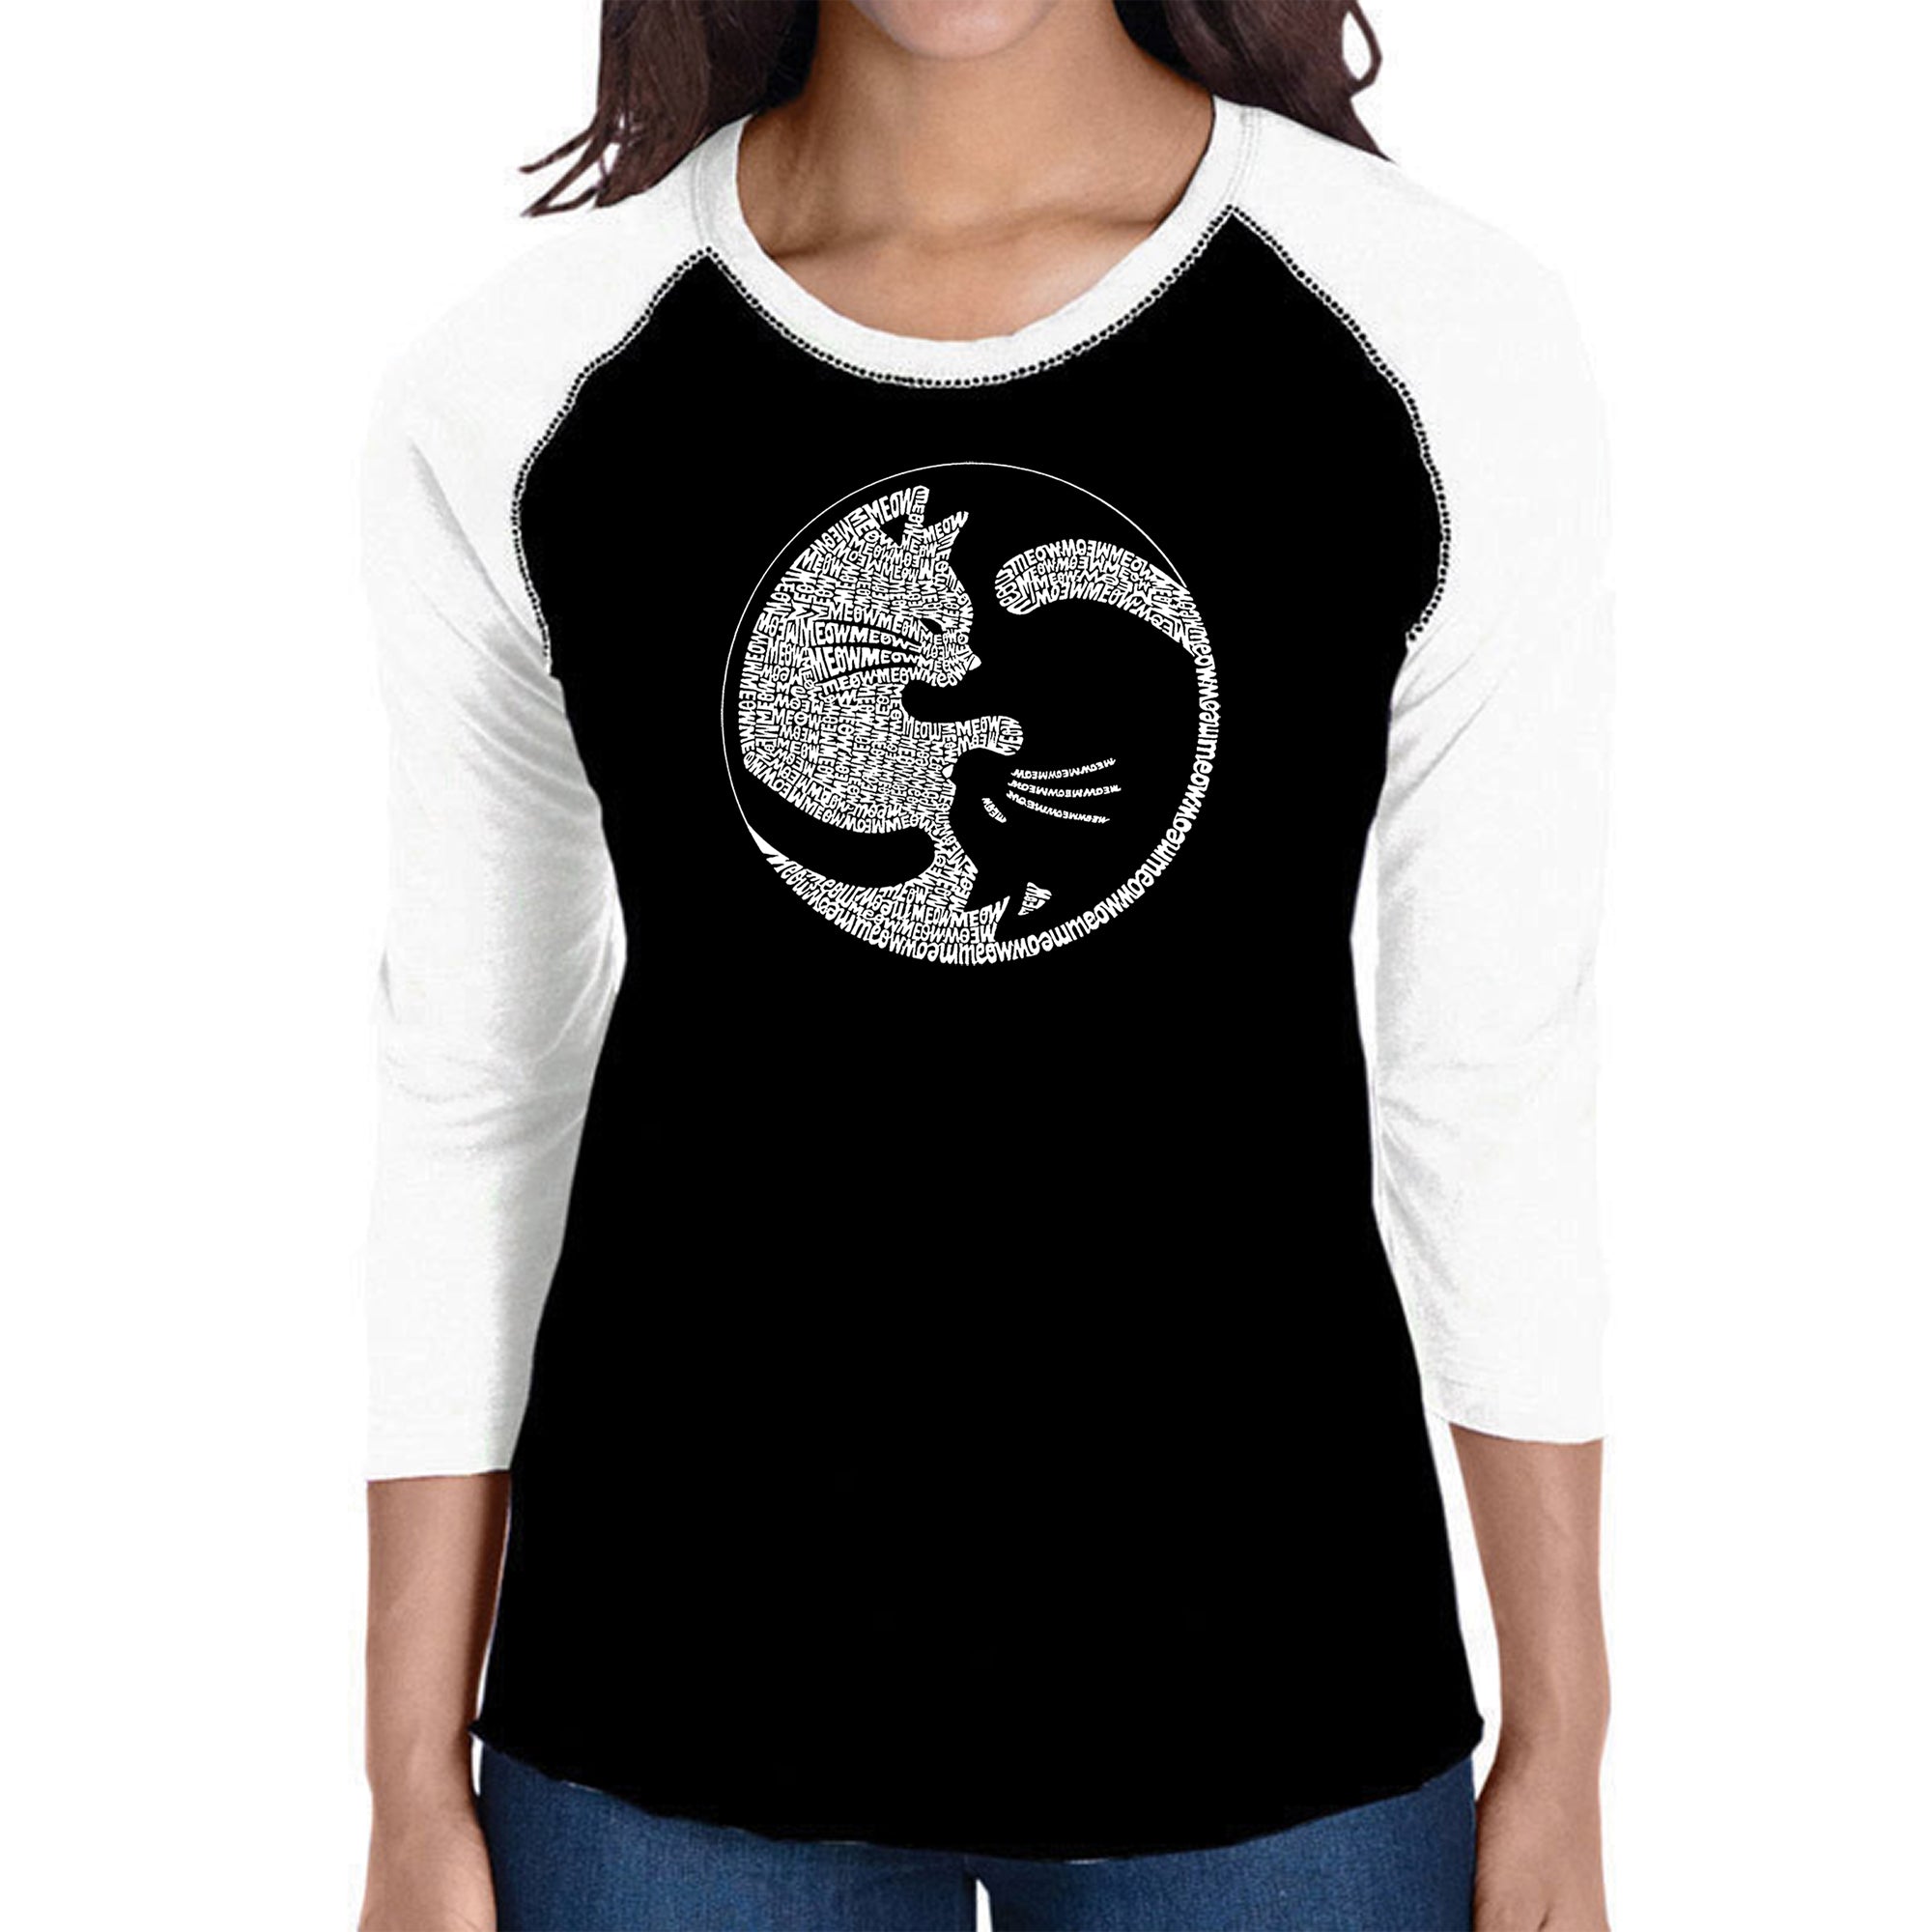 Yin Yang Cat - Women's Raglan Word Art T-Shirt - Black/White - XX-Large